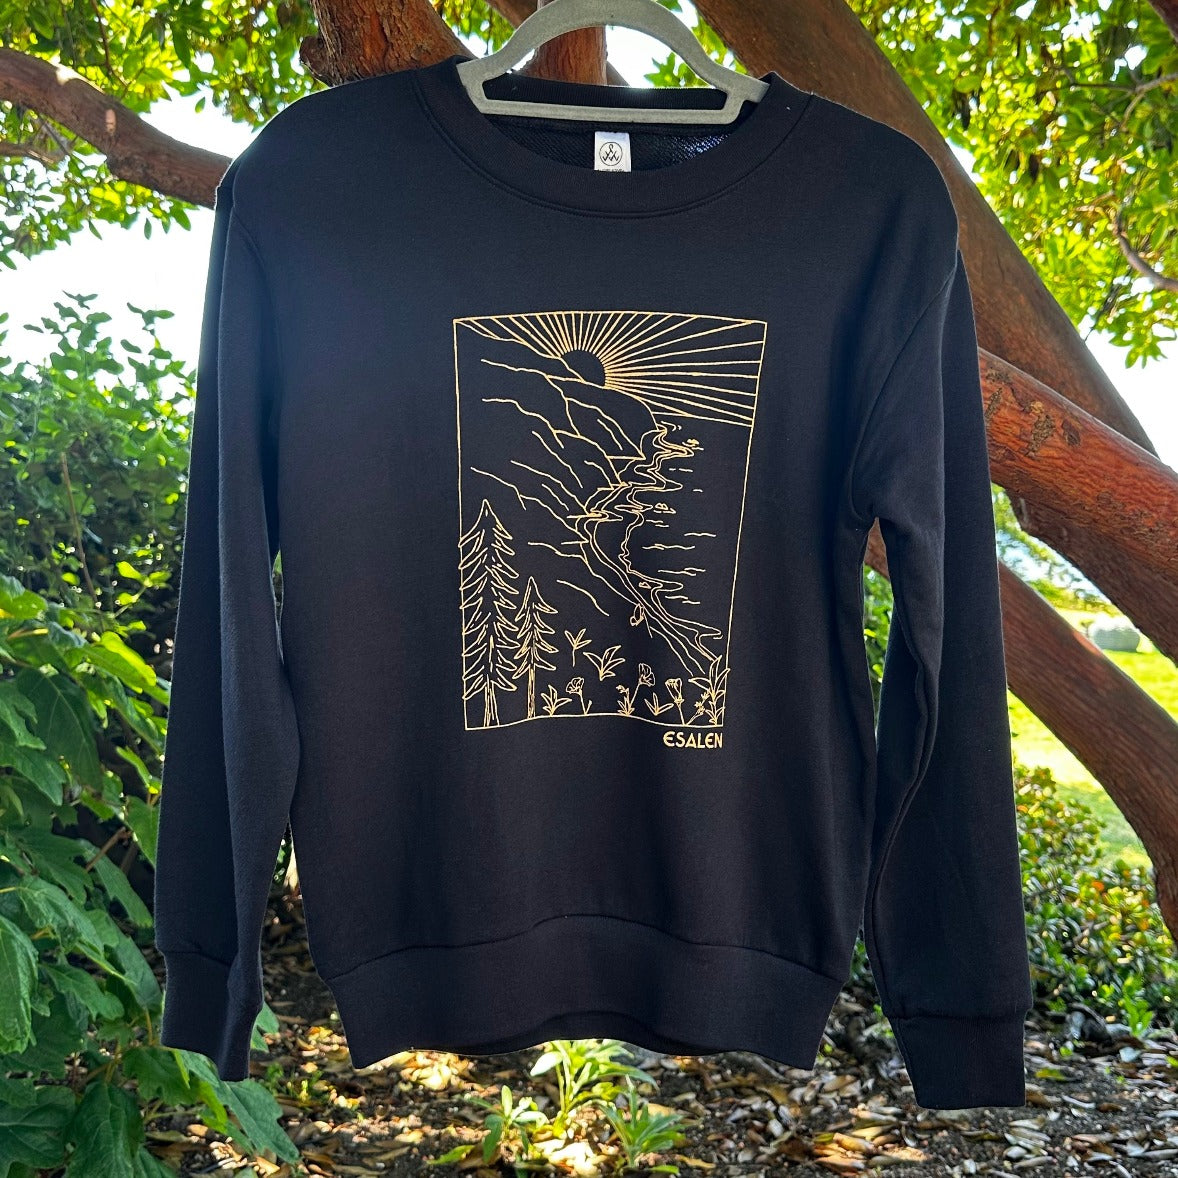 Square Cliff Esalen Landscape Sweatshirt in Black - Classic Collection